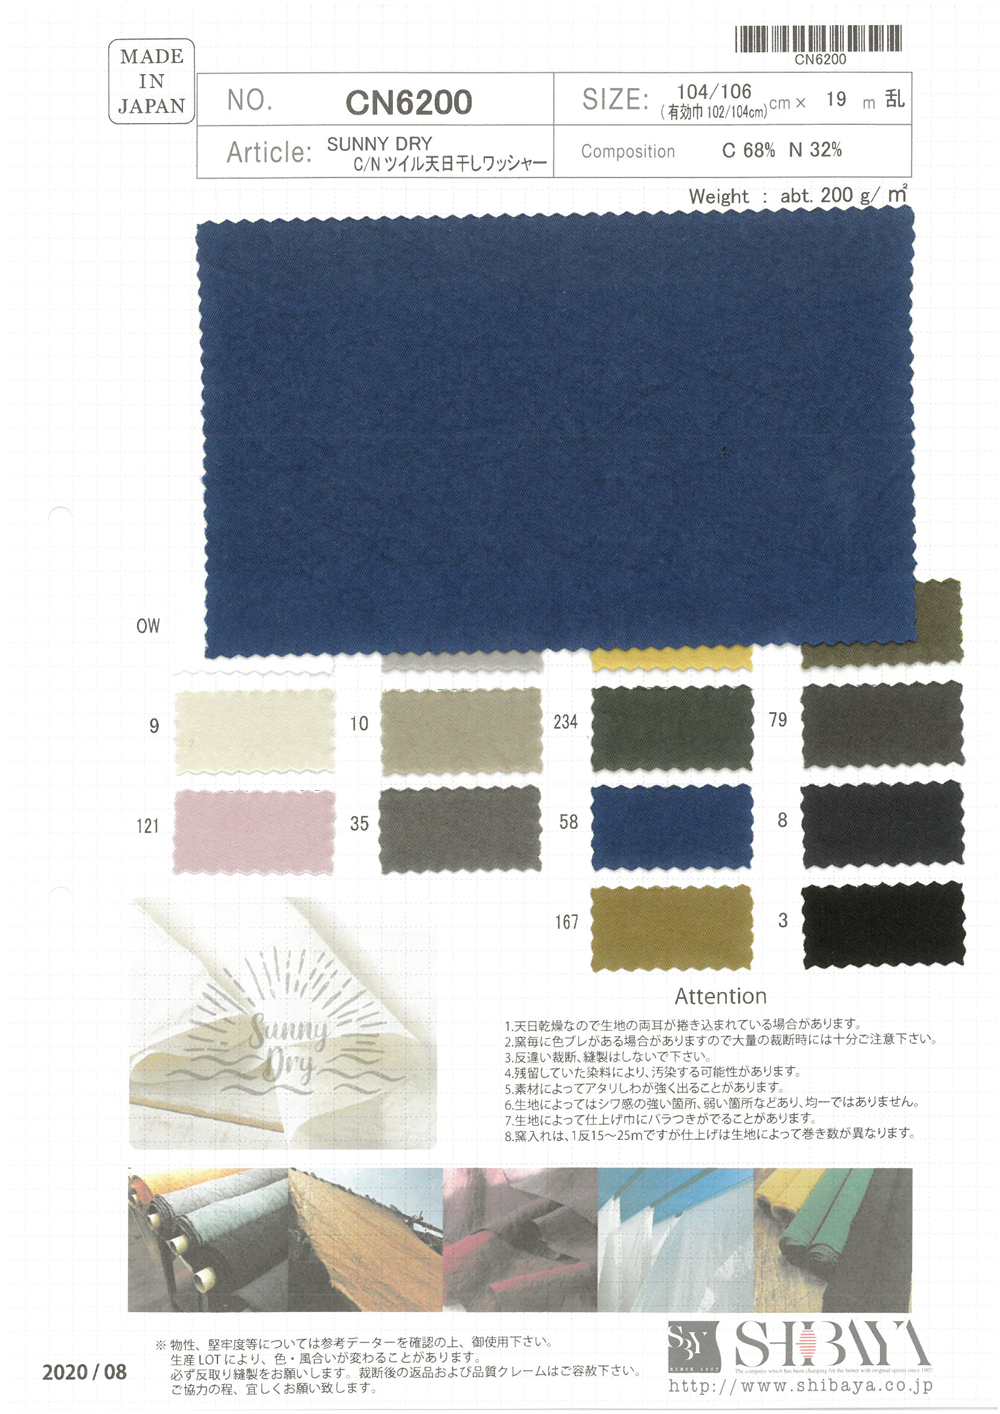 CN6200 SUNNY DRY C / N Twill Sun-dried Washer Processing[Textile / Fabric] SHIBAYA